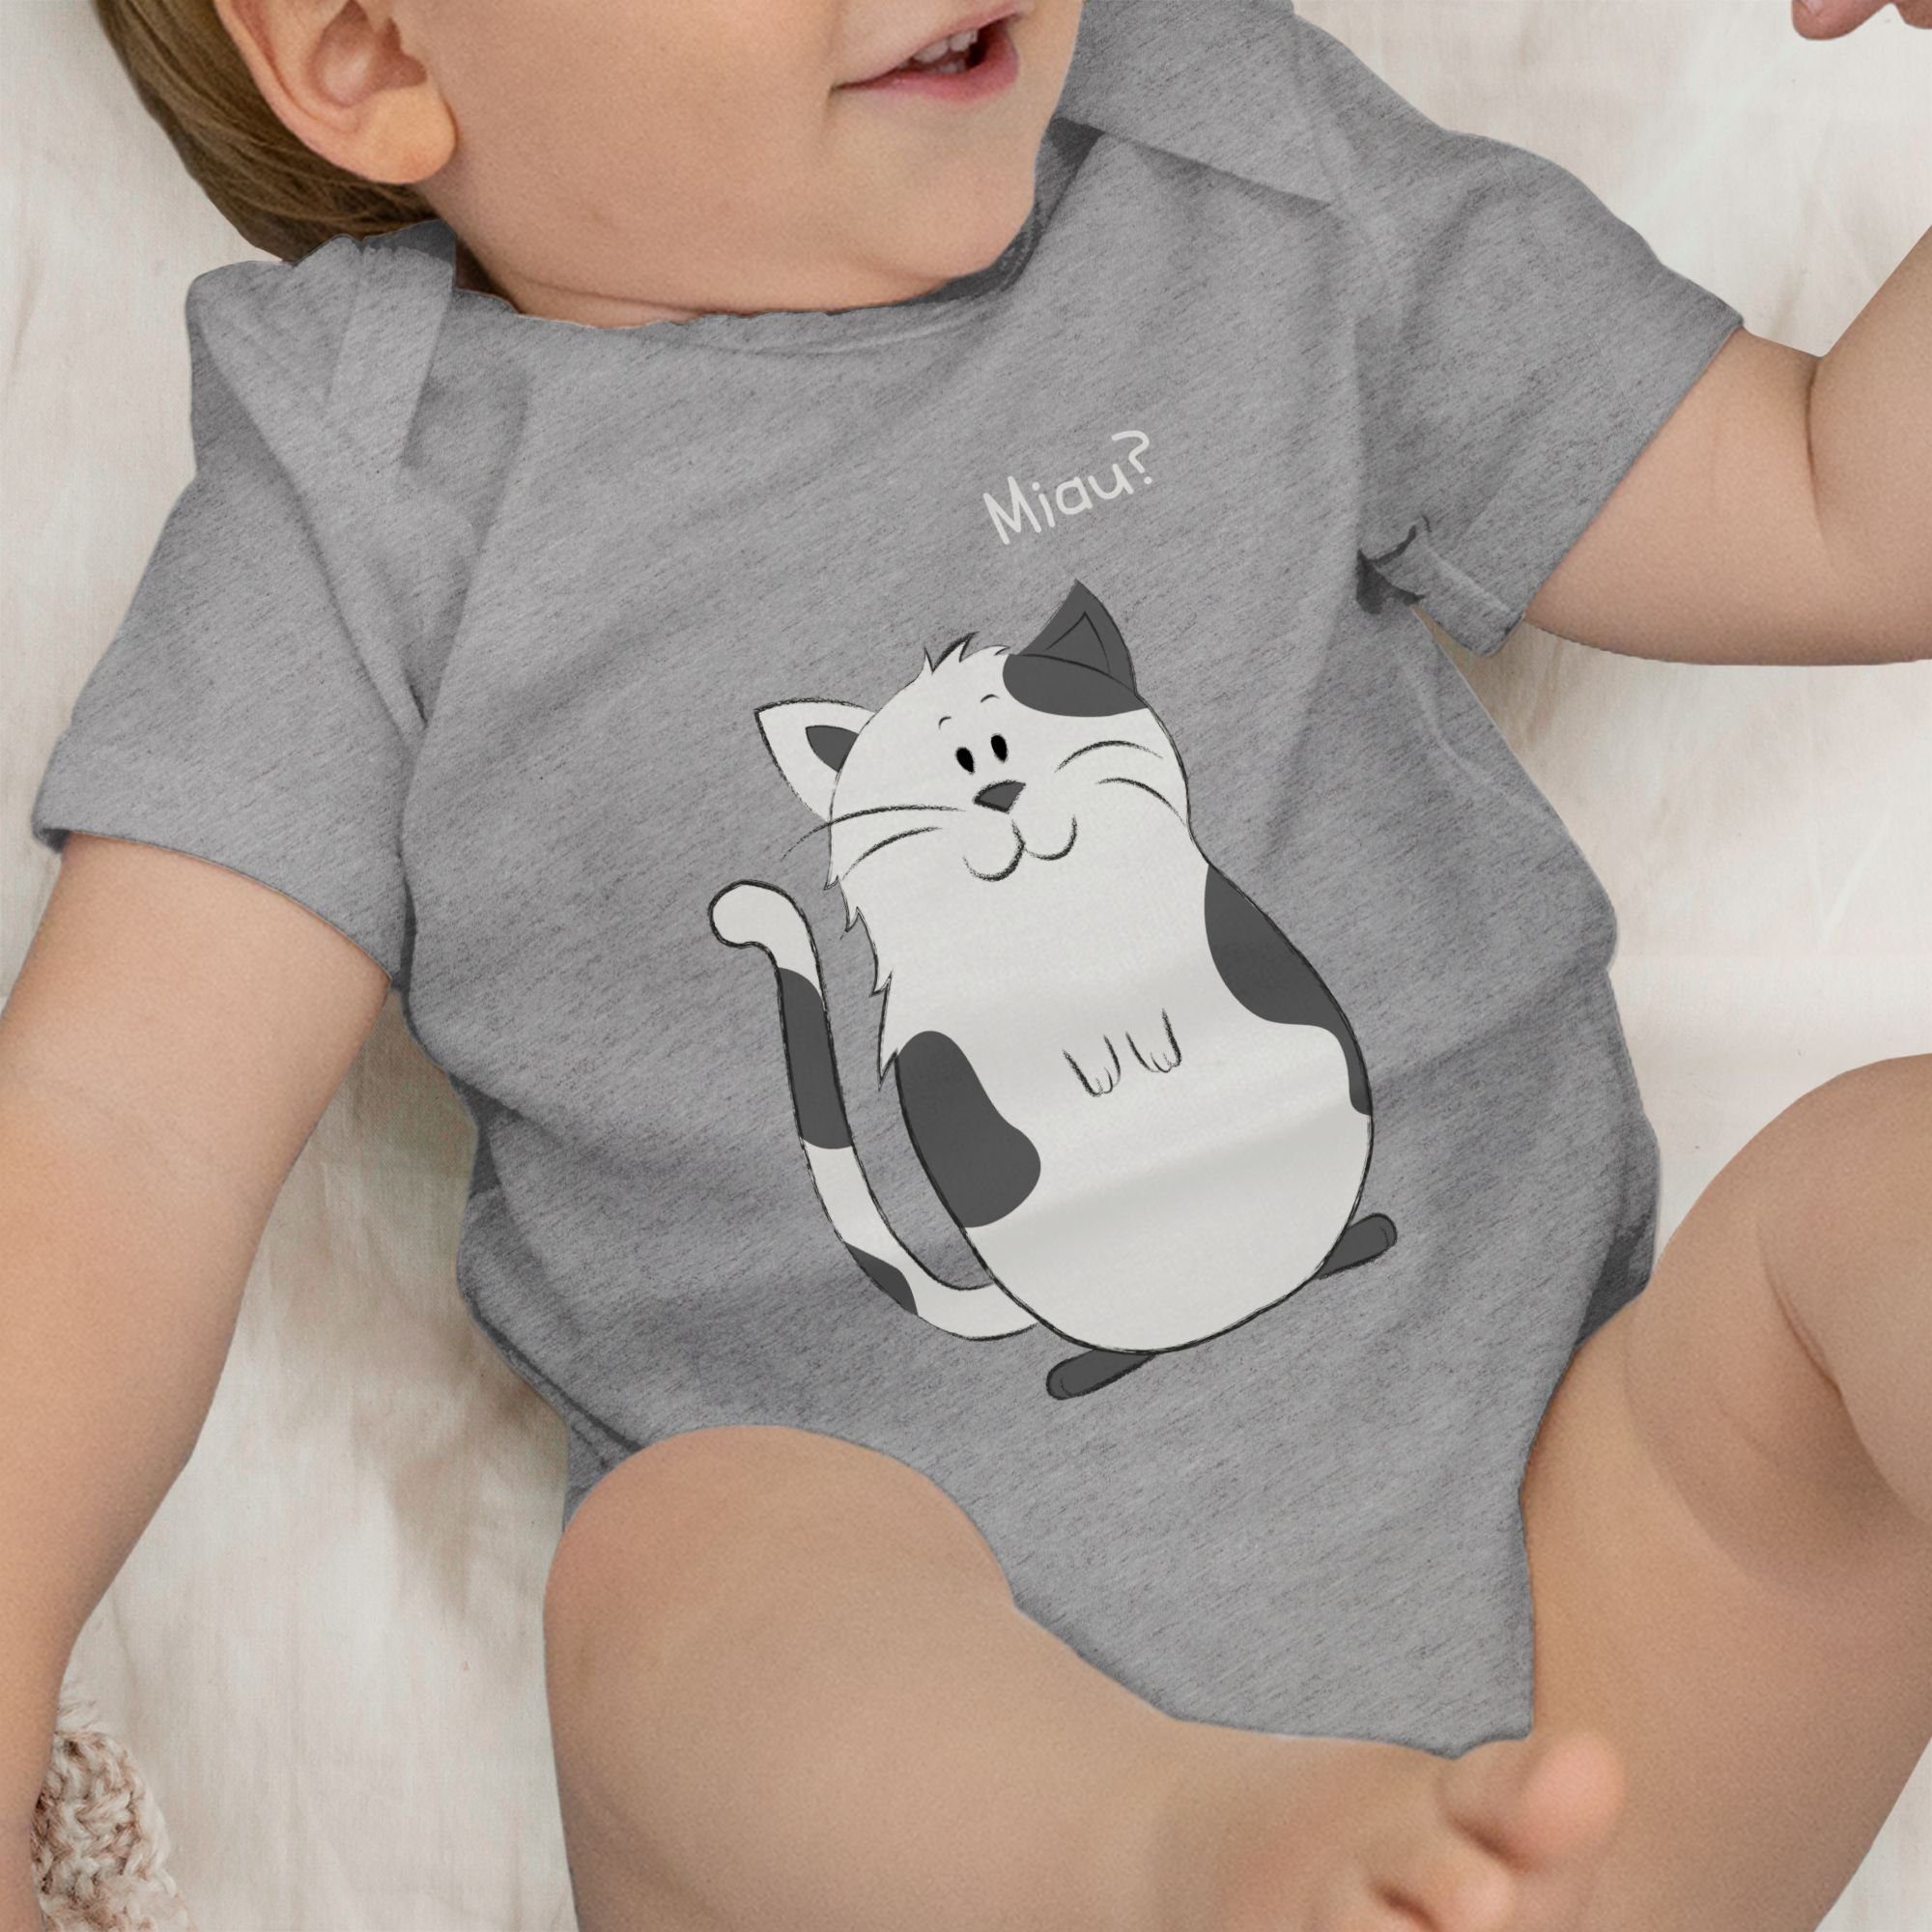 Animal Katze Print 1 lustige Shirtracer meliert Baby Tiermotiv Grau Shirtbody